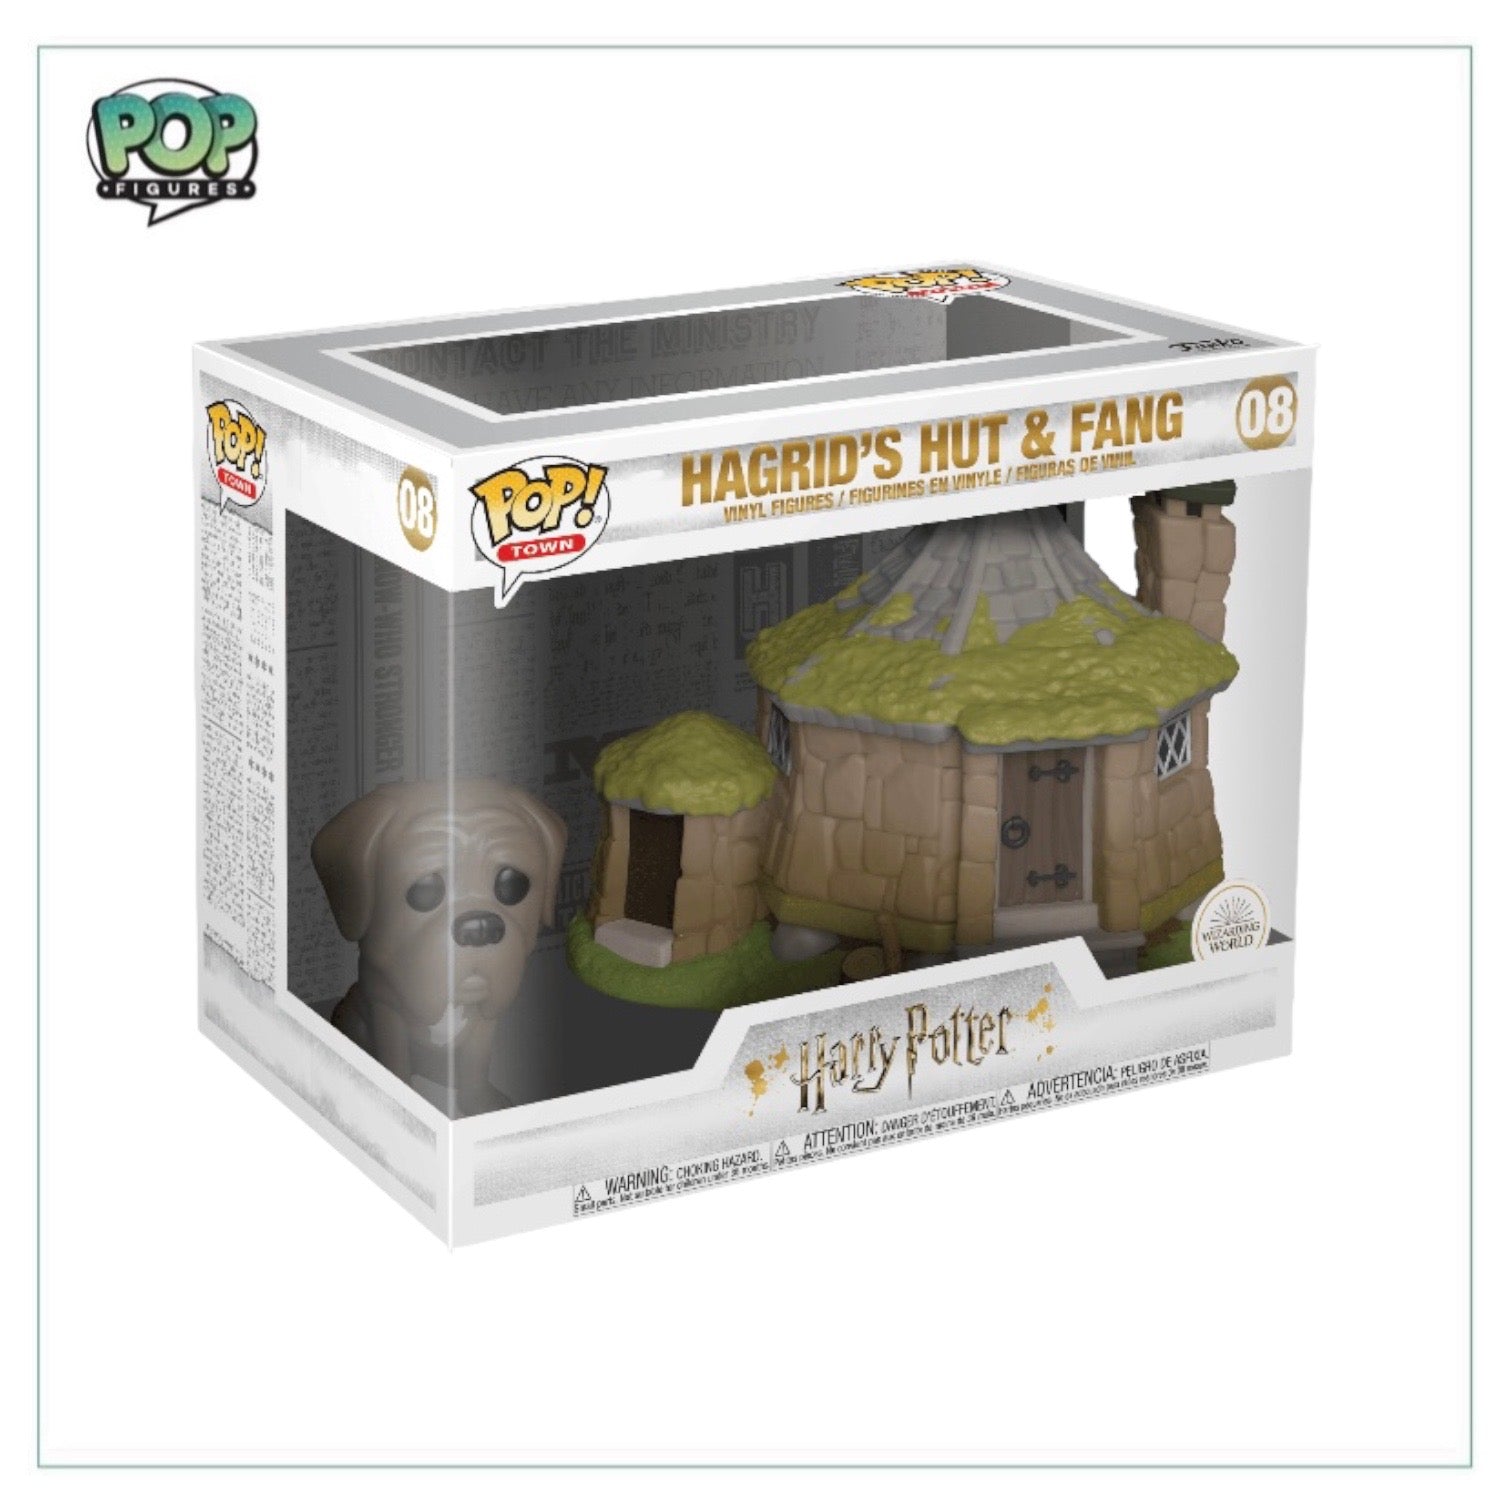 Hagrid's Hut & Fang #08 Funko Pop Town! - Harry Potter